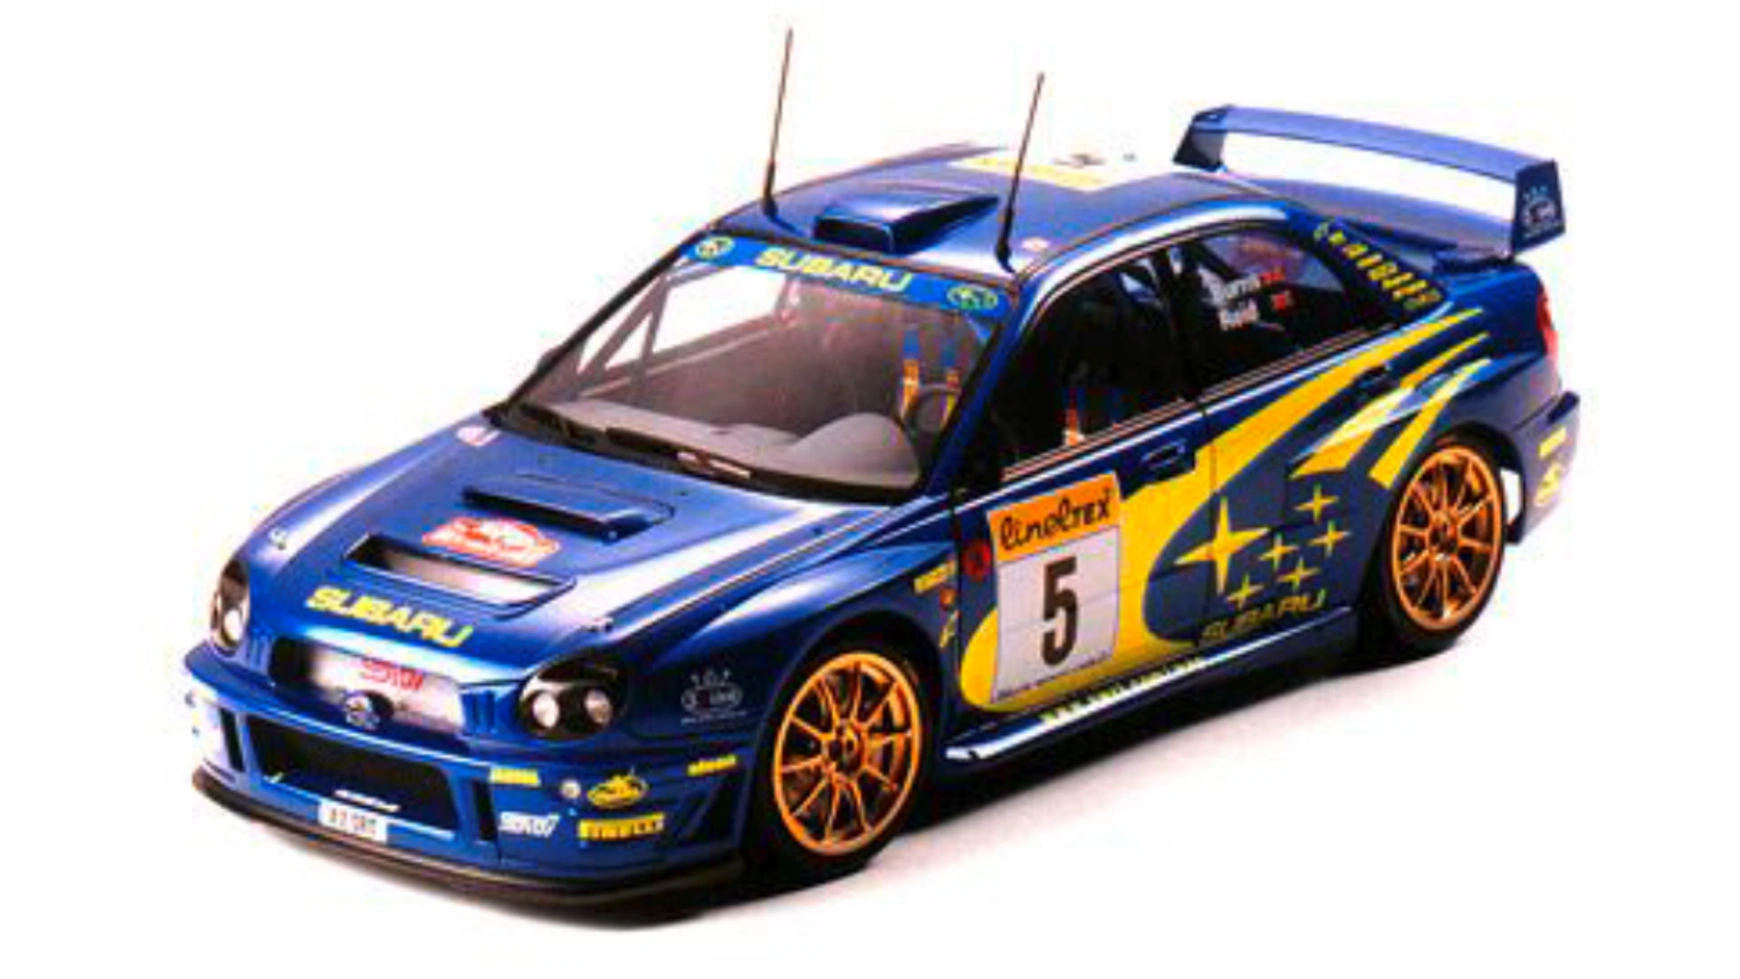 Tamiya 1:24 Subaru Impreza WRC 2001 subaru impreza s7 wrc 5 subaru wrt burns reid winner rally new zealand чемпион мира 2001 масштабная модель коллекционная